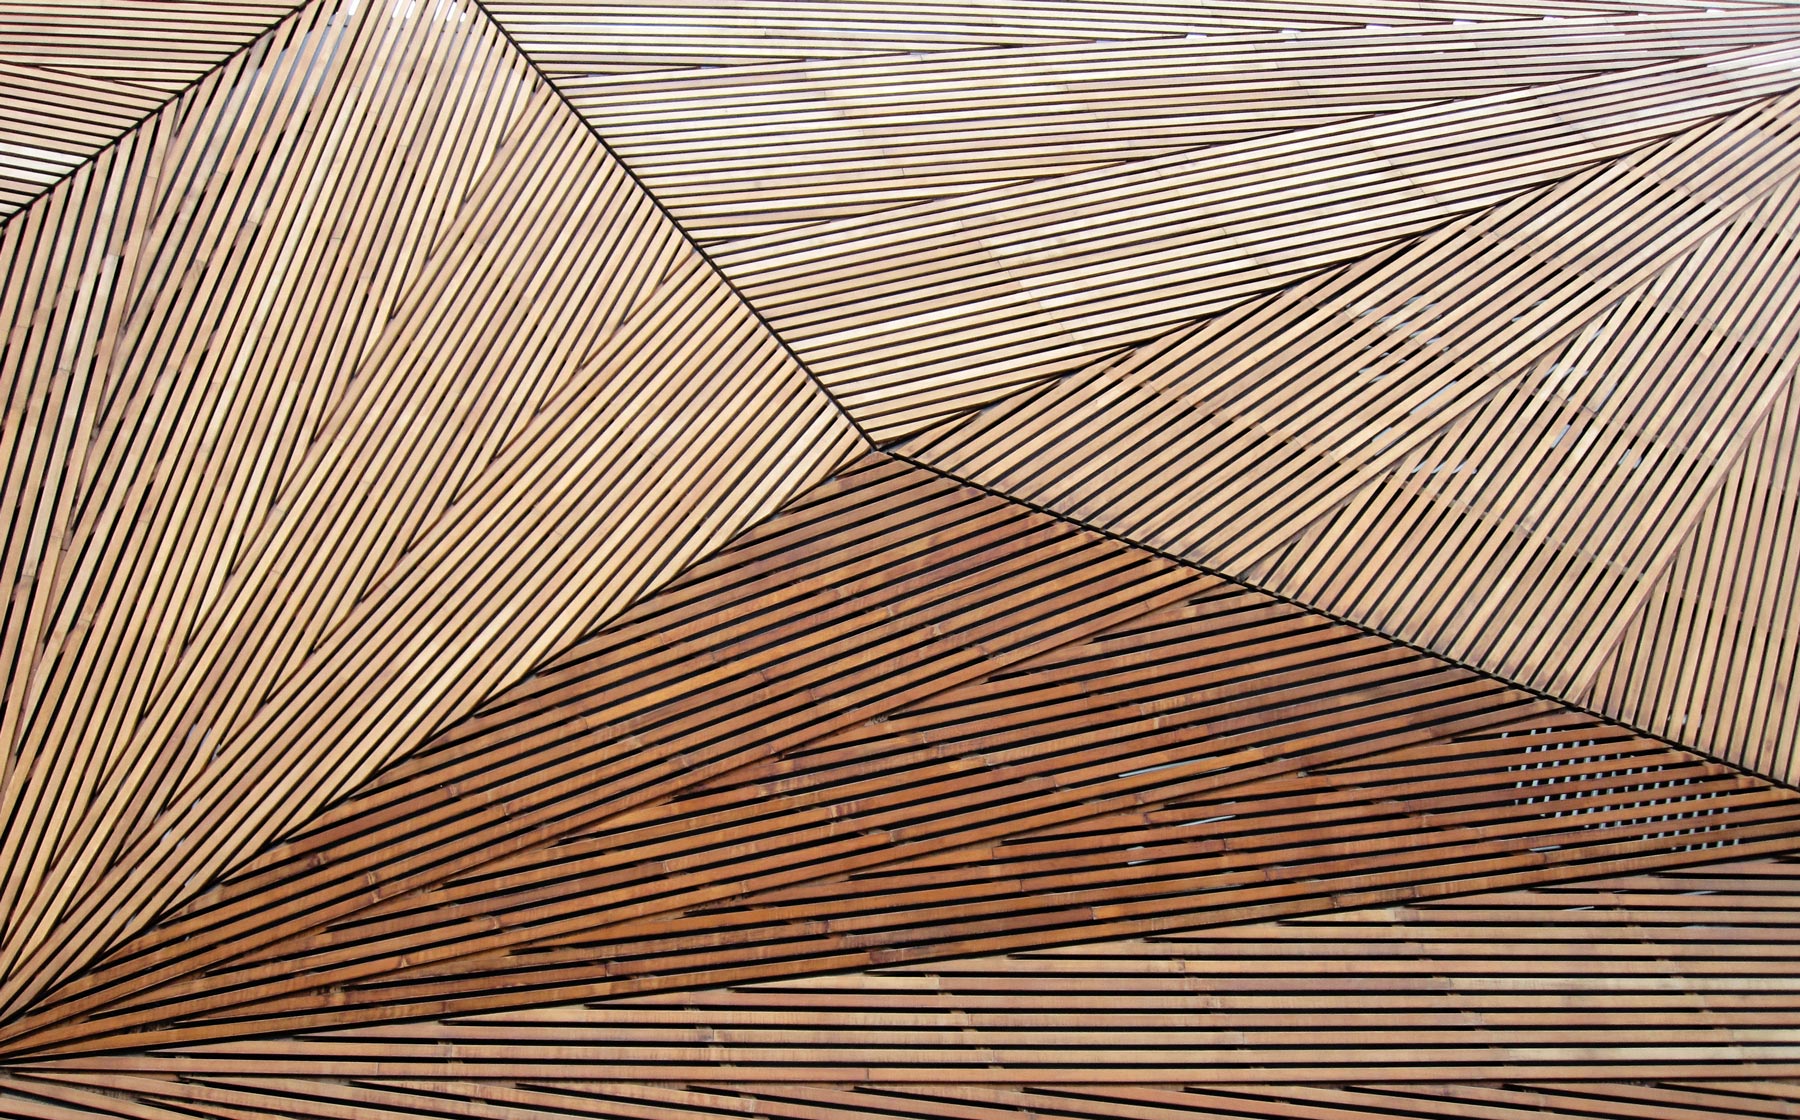 Architectural tesselation pattern